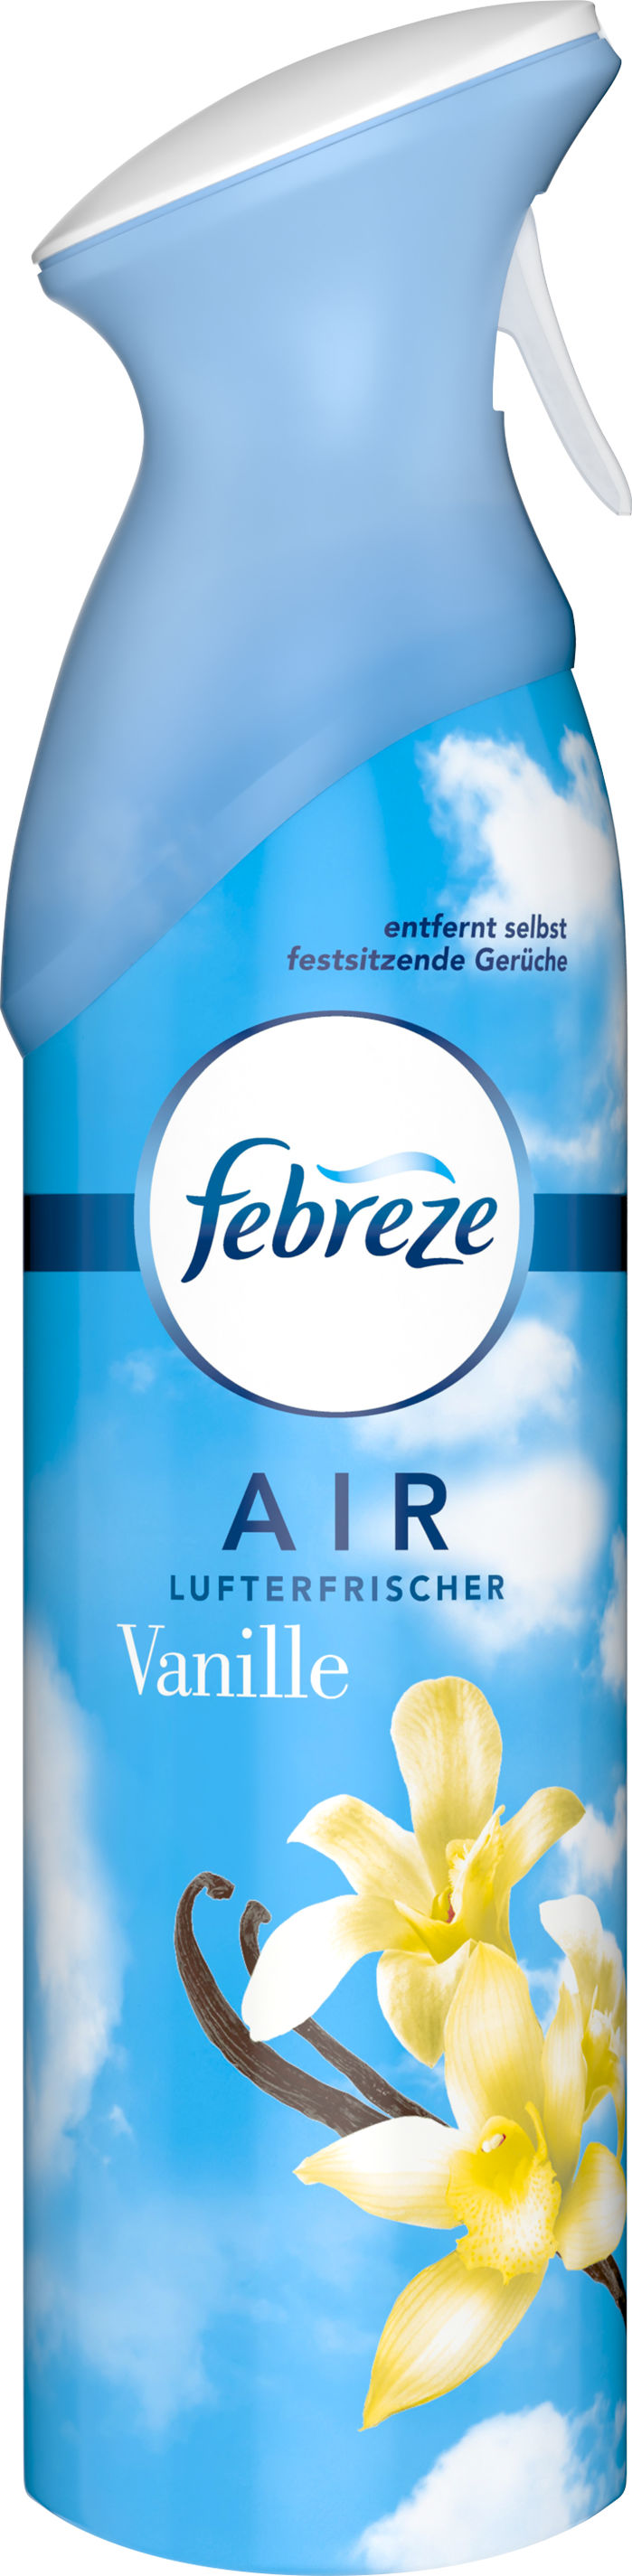 Preview: Febreze Lufterfrischer Raumduft Vanille (normal/Latte/LE) Spray 300ml